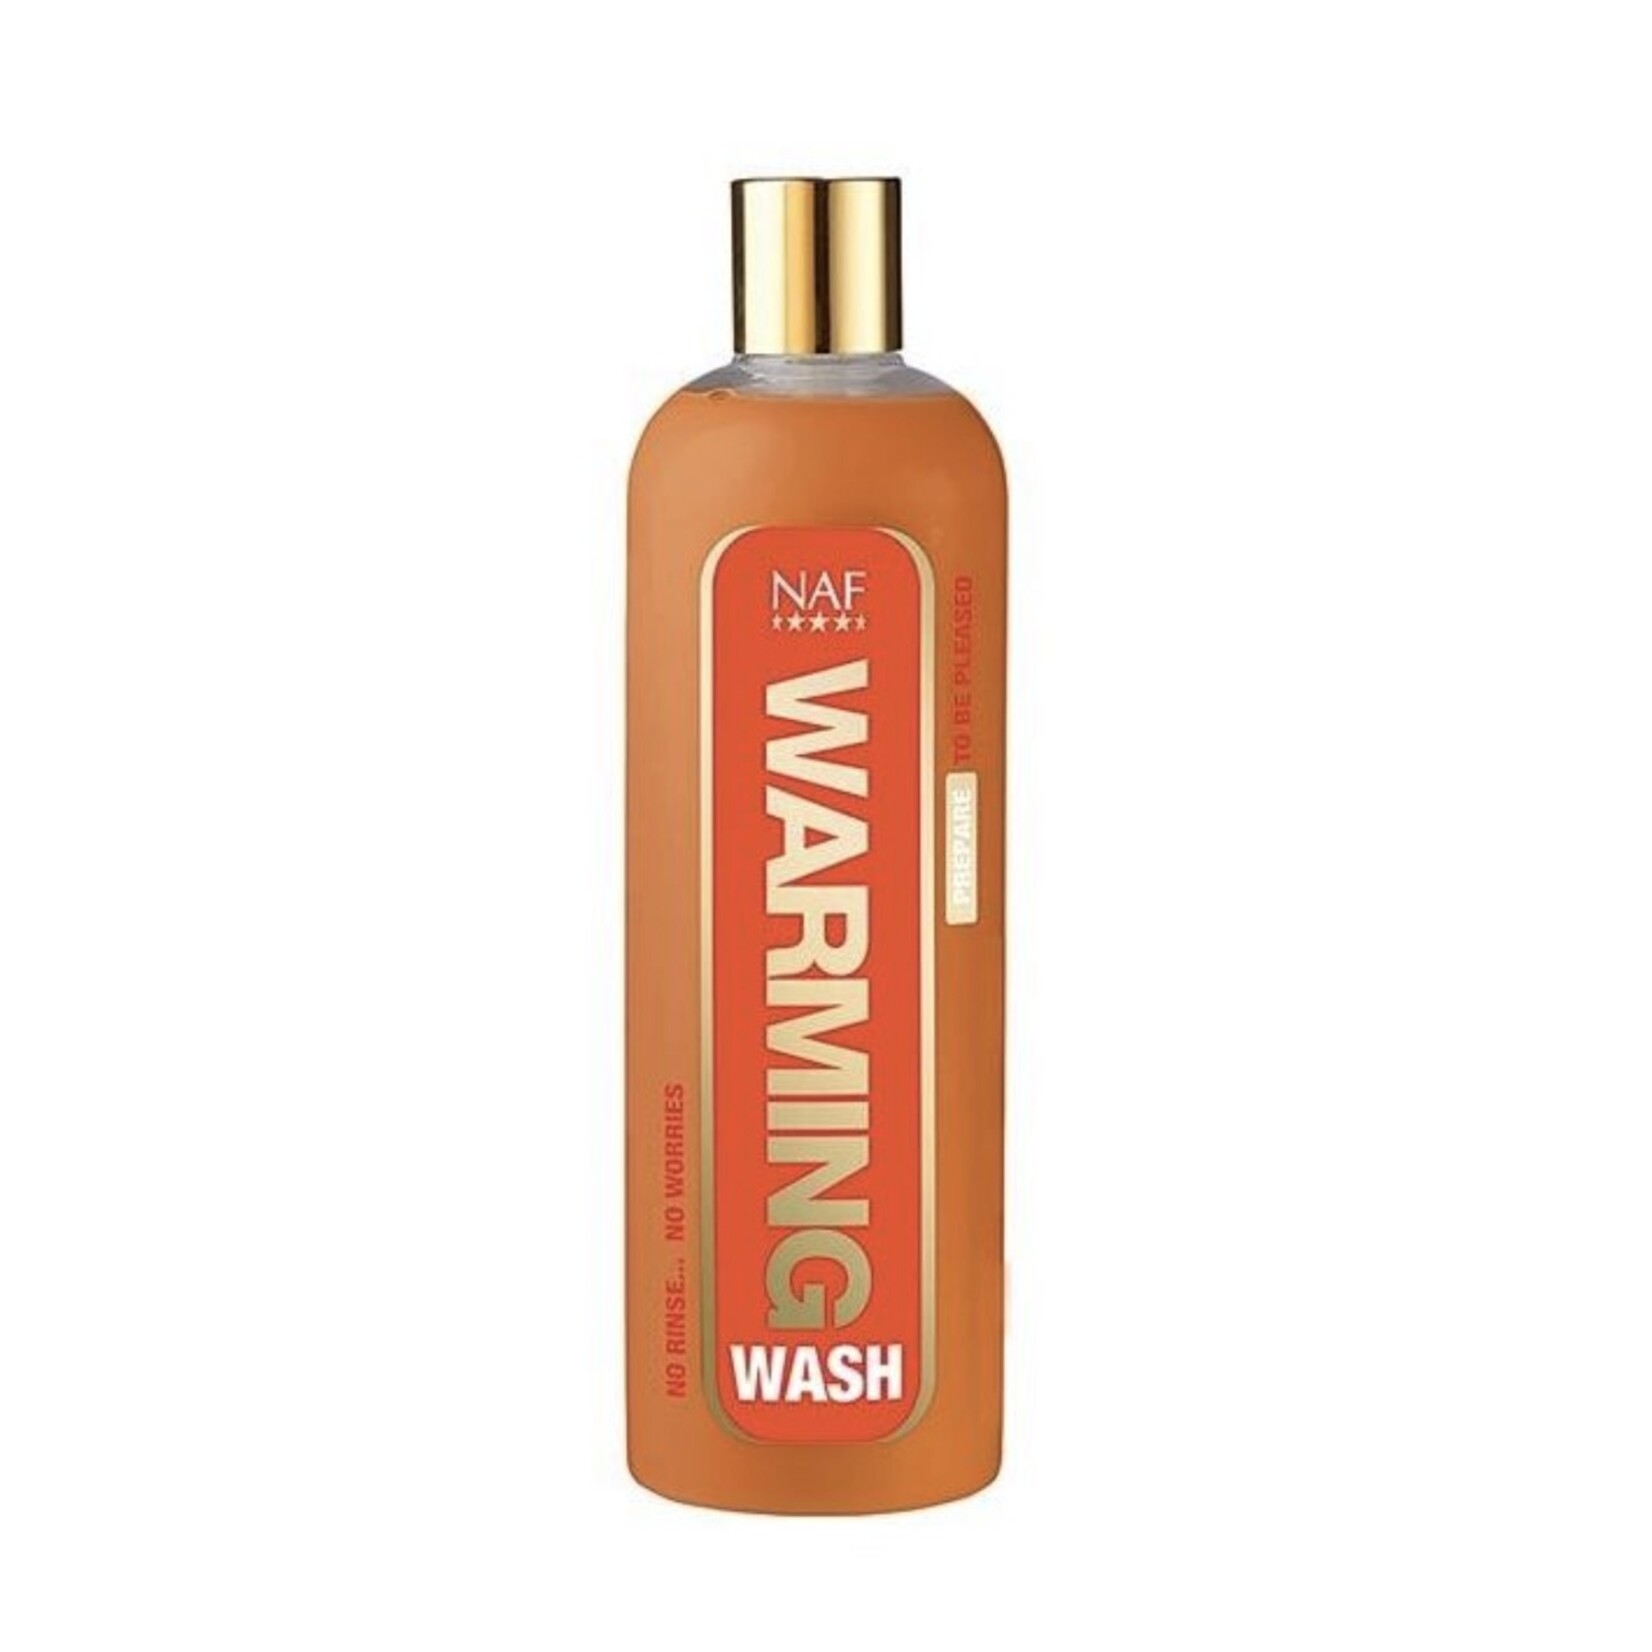 NAF Naf warming wash shampoo